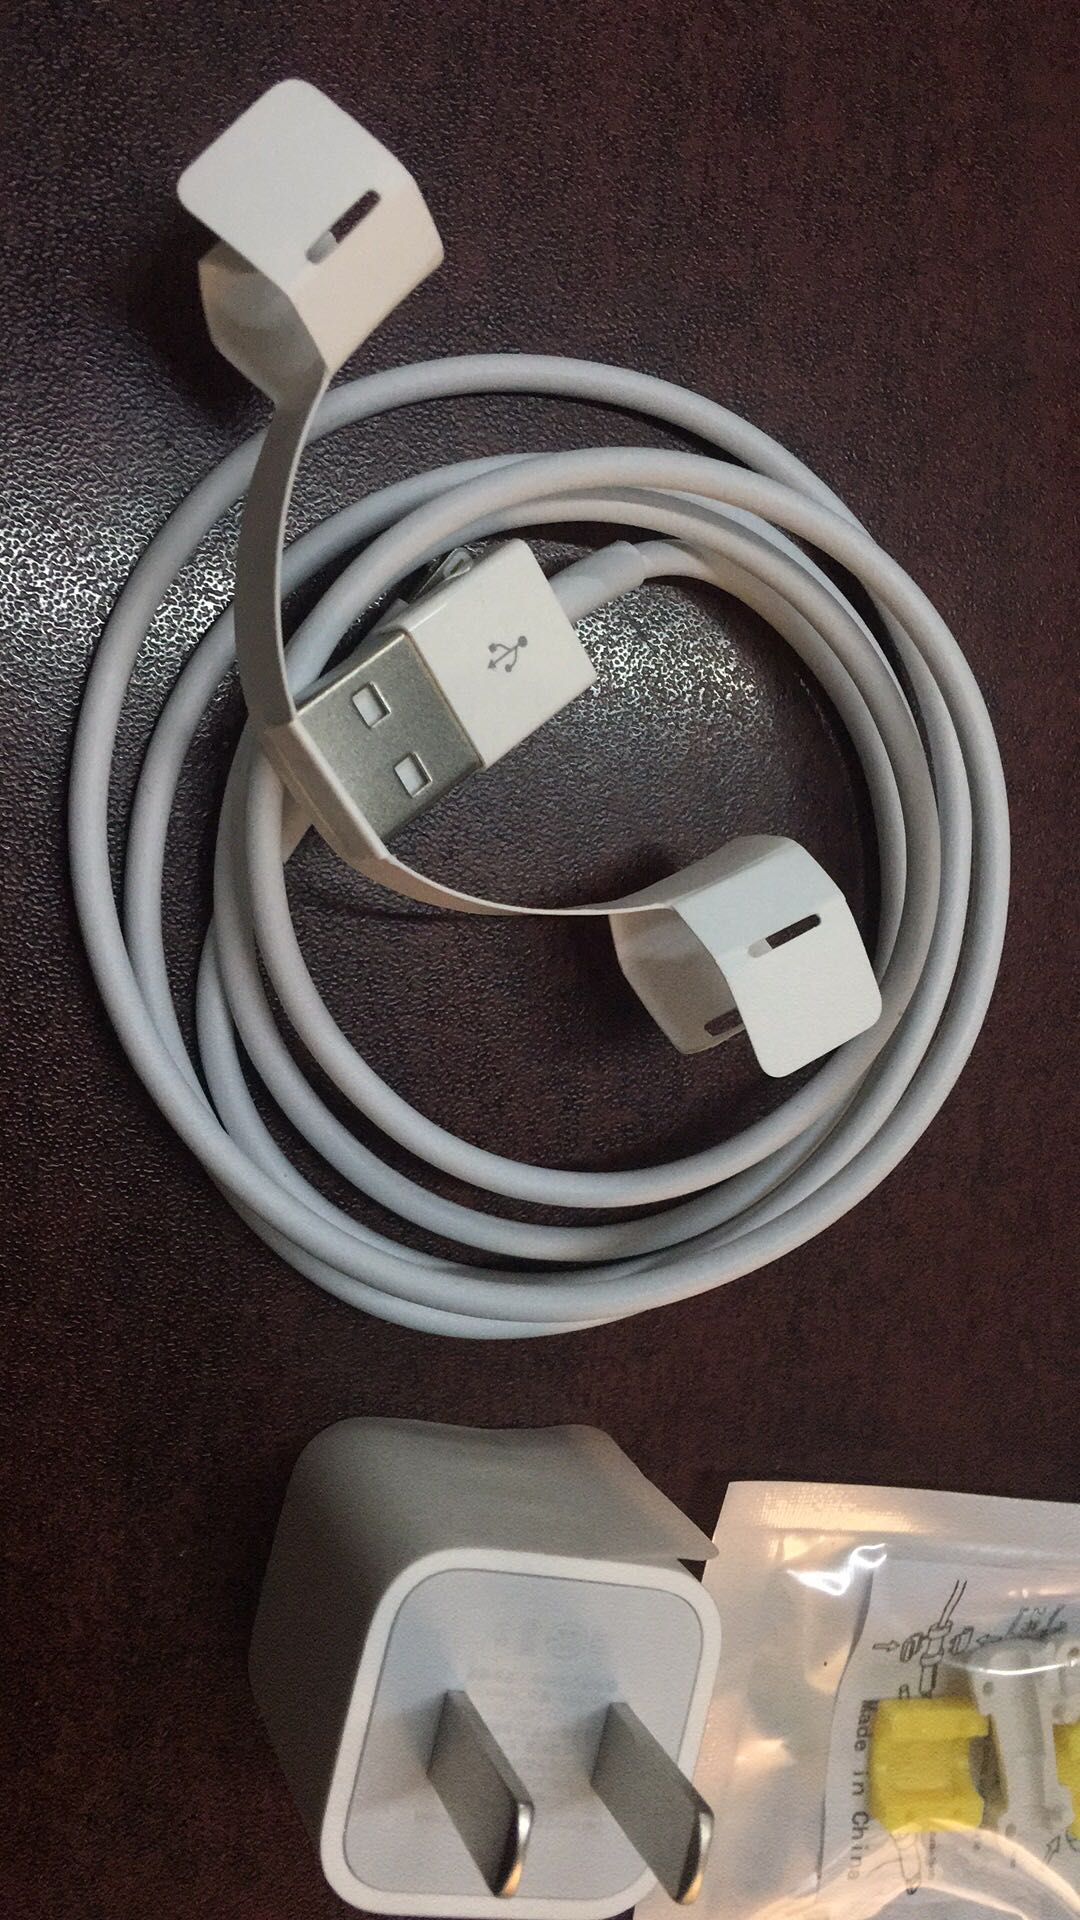 apple苹果原装充电器iphonex/7plus/8sx 6 插头max充电头5w 正品线充